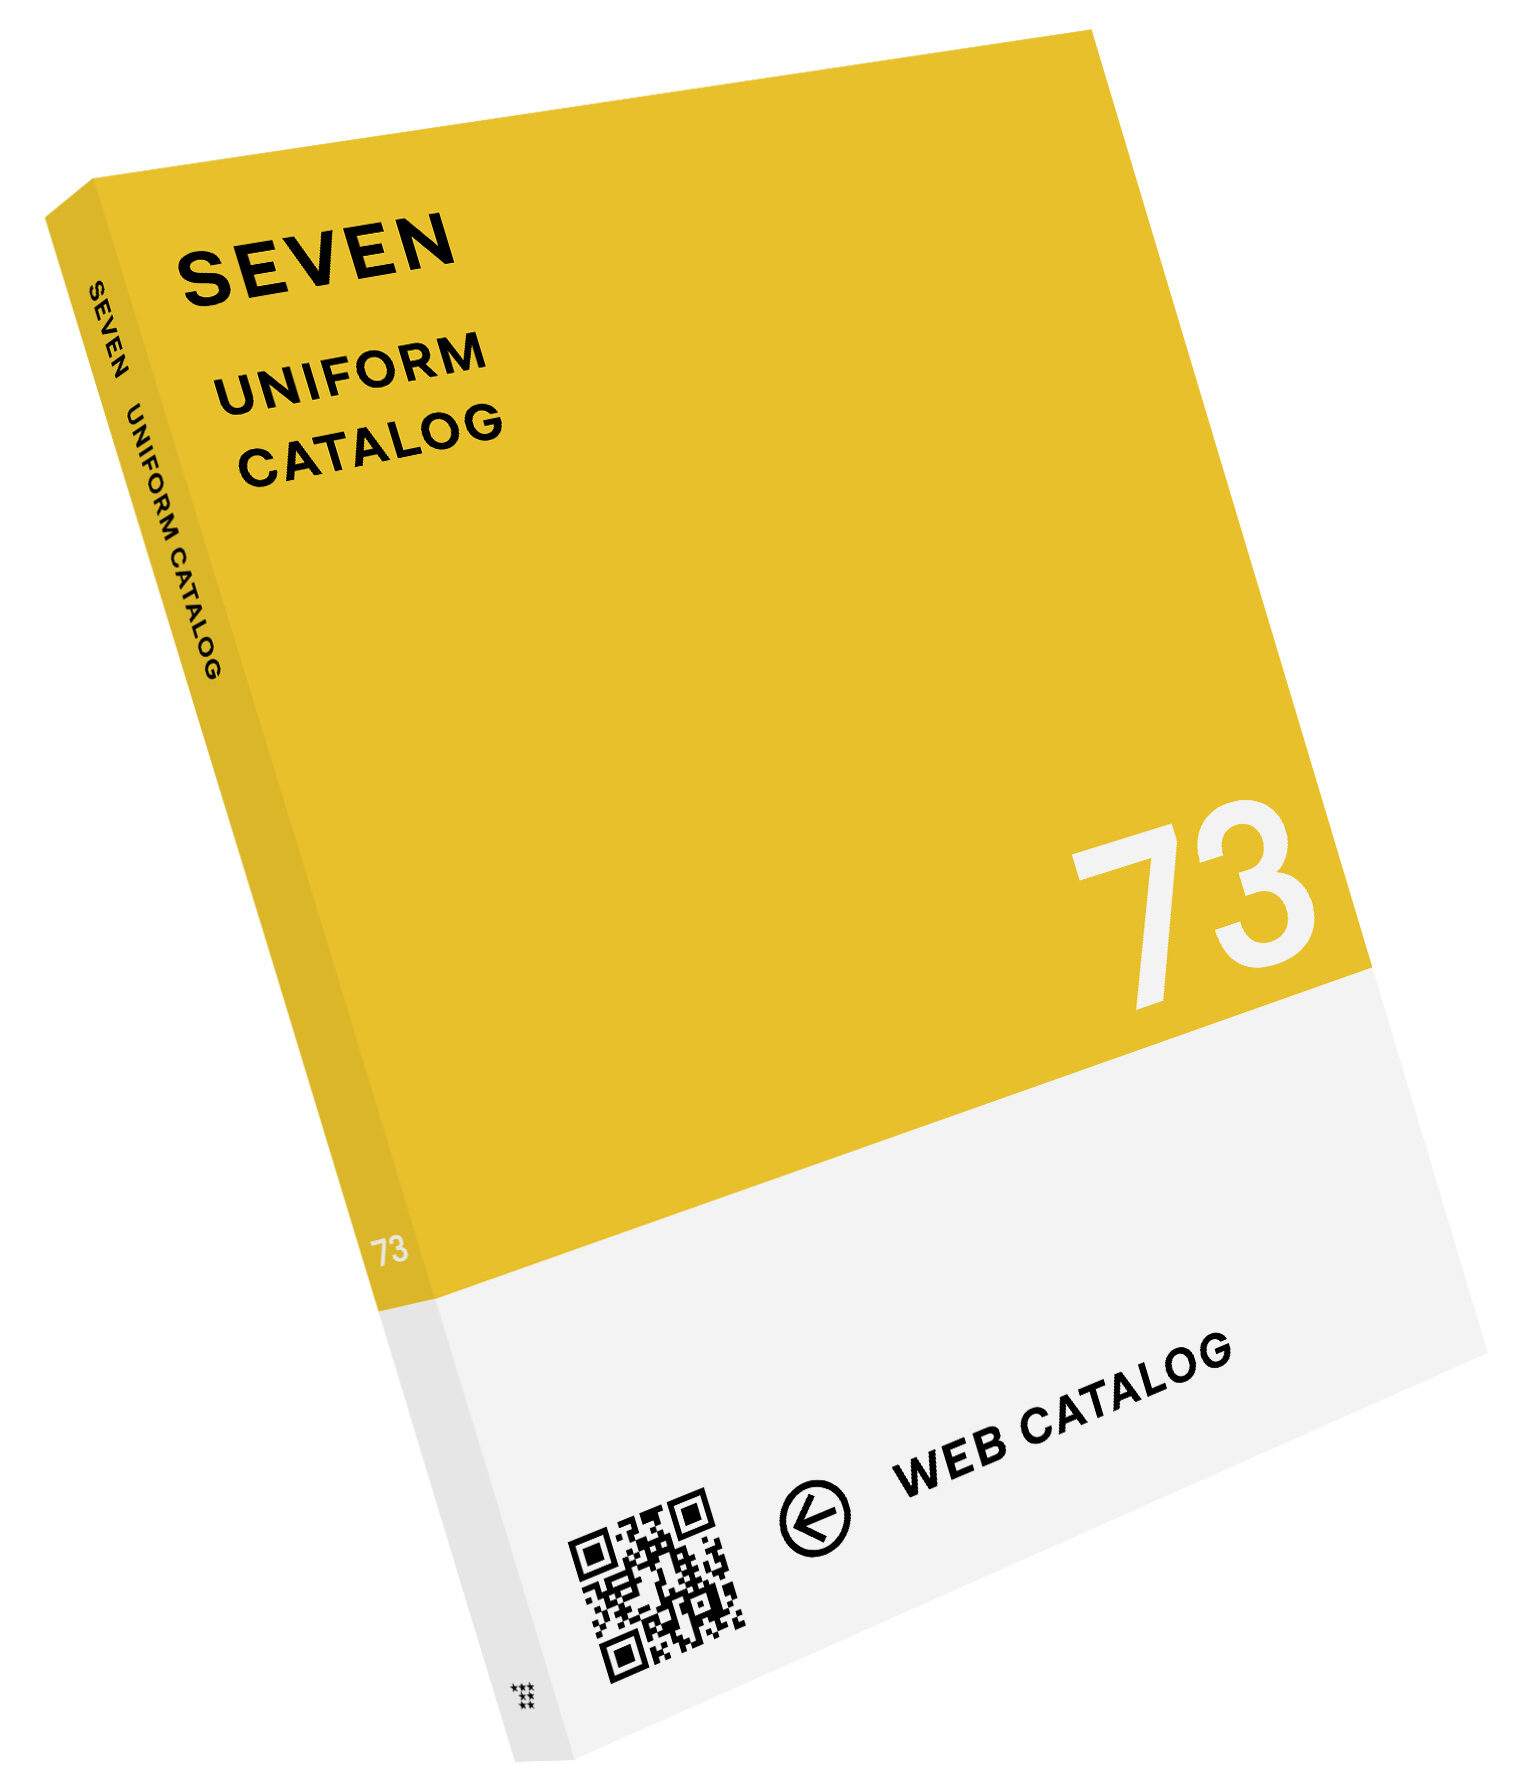 SEVEN UNIFOM CATALOG 73